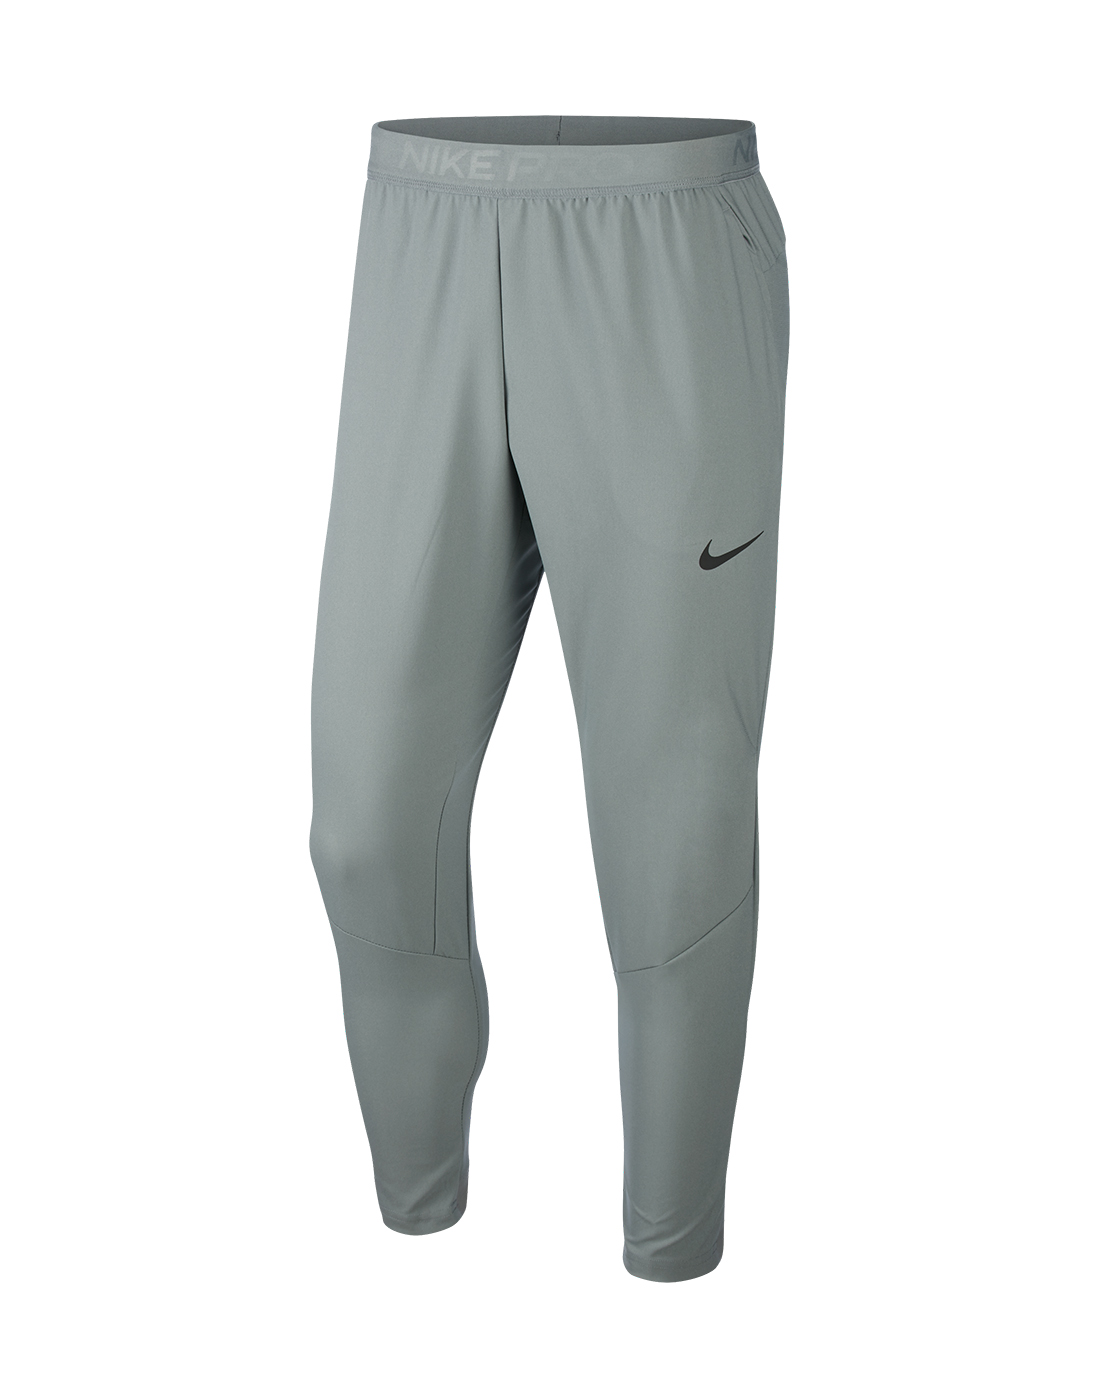 Nike Mens Flex Vent Max Pants - Grey | Life Style Sports UK